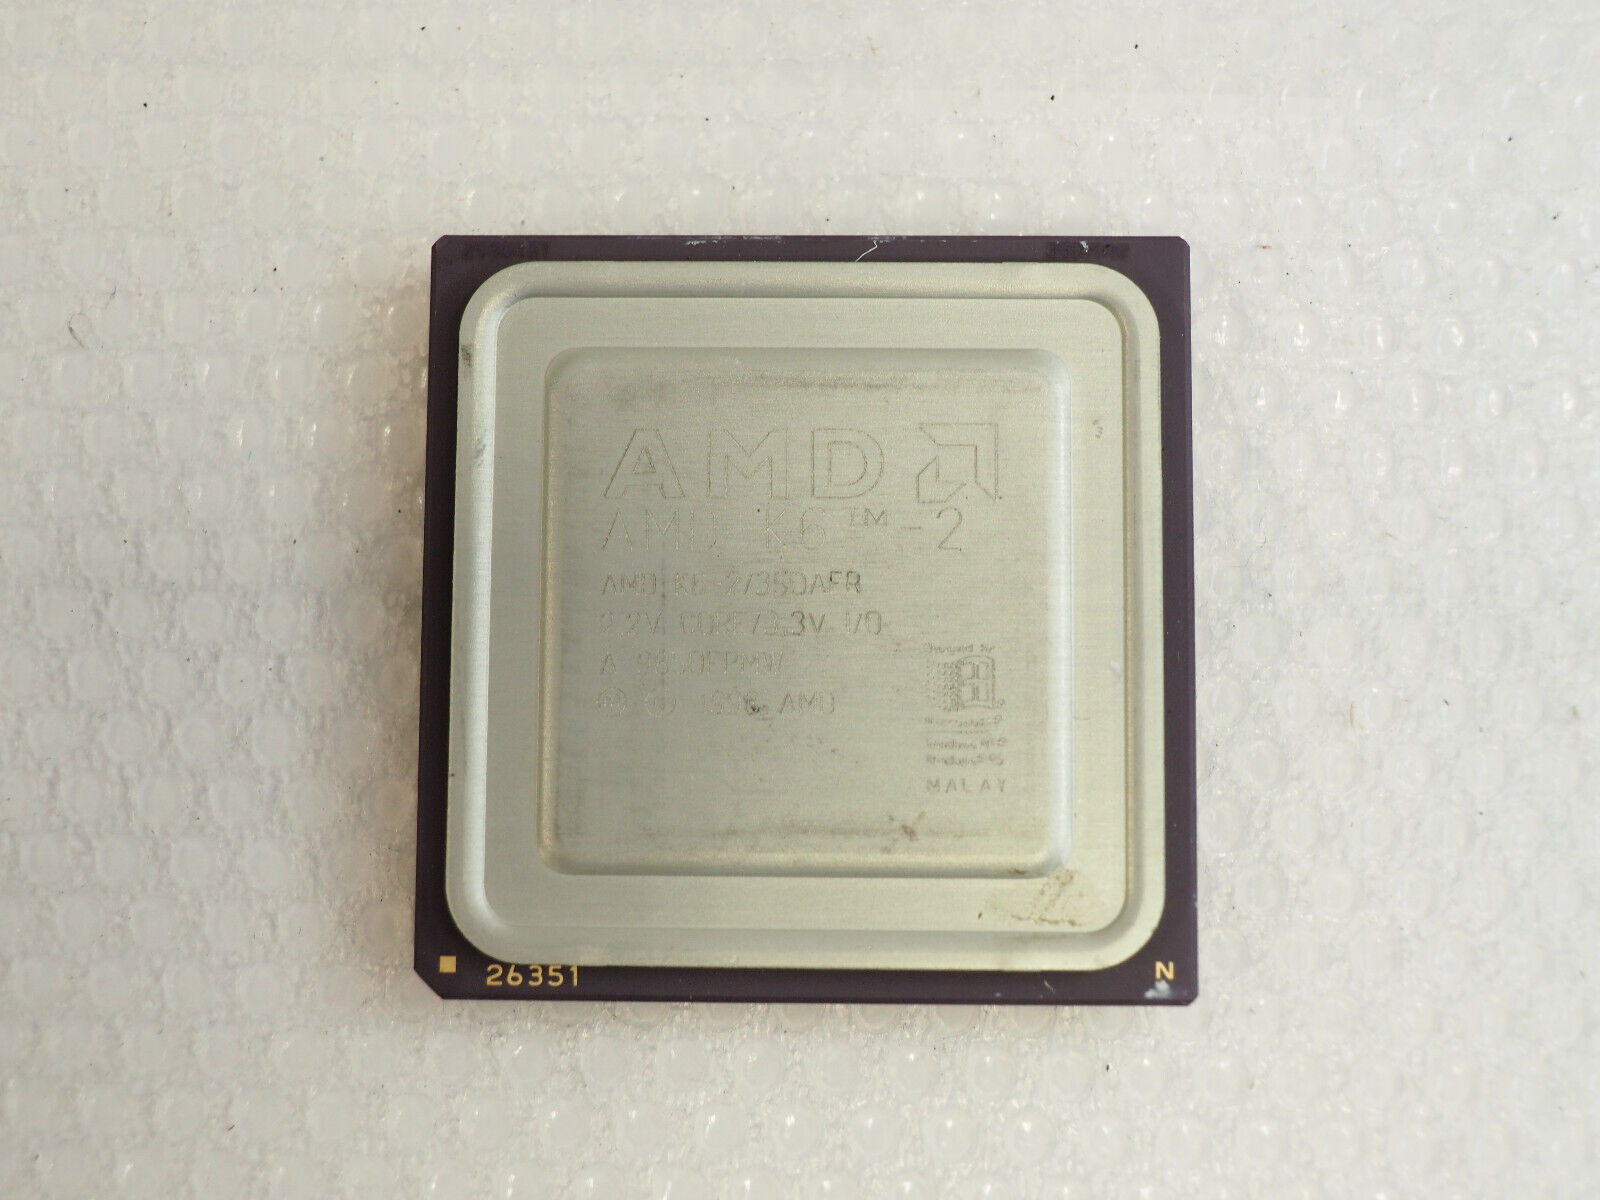 AMD K6-2 /350AFR 2.2V Core 3.3V I/O 1998 CPU Processor